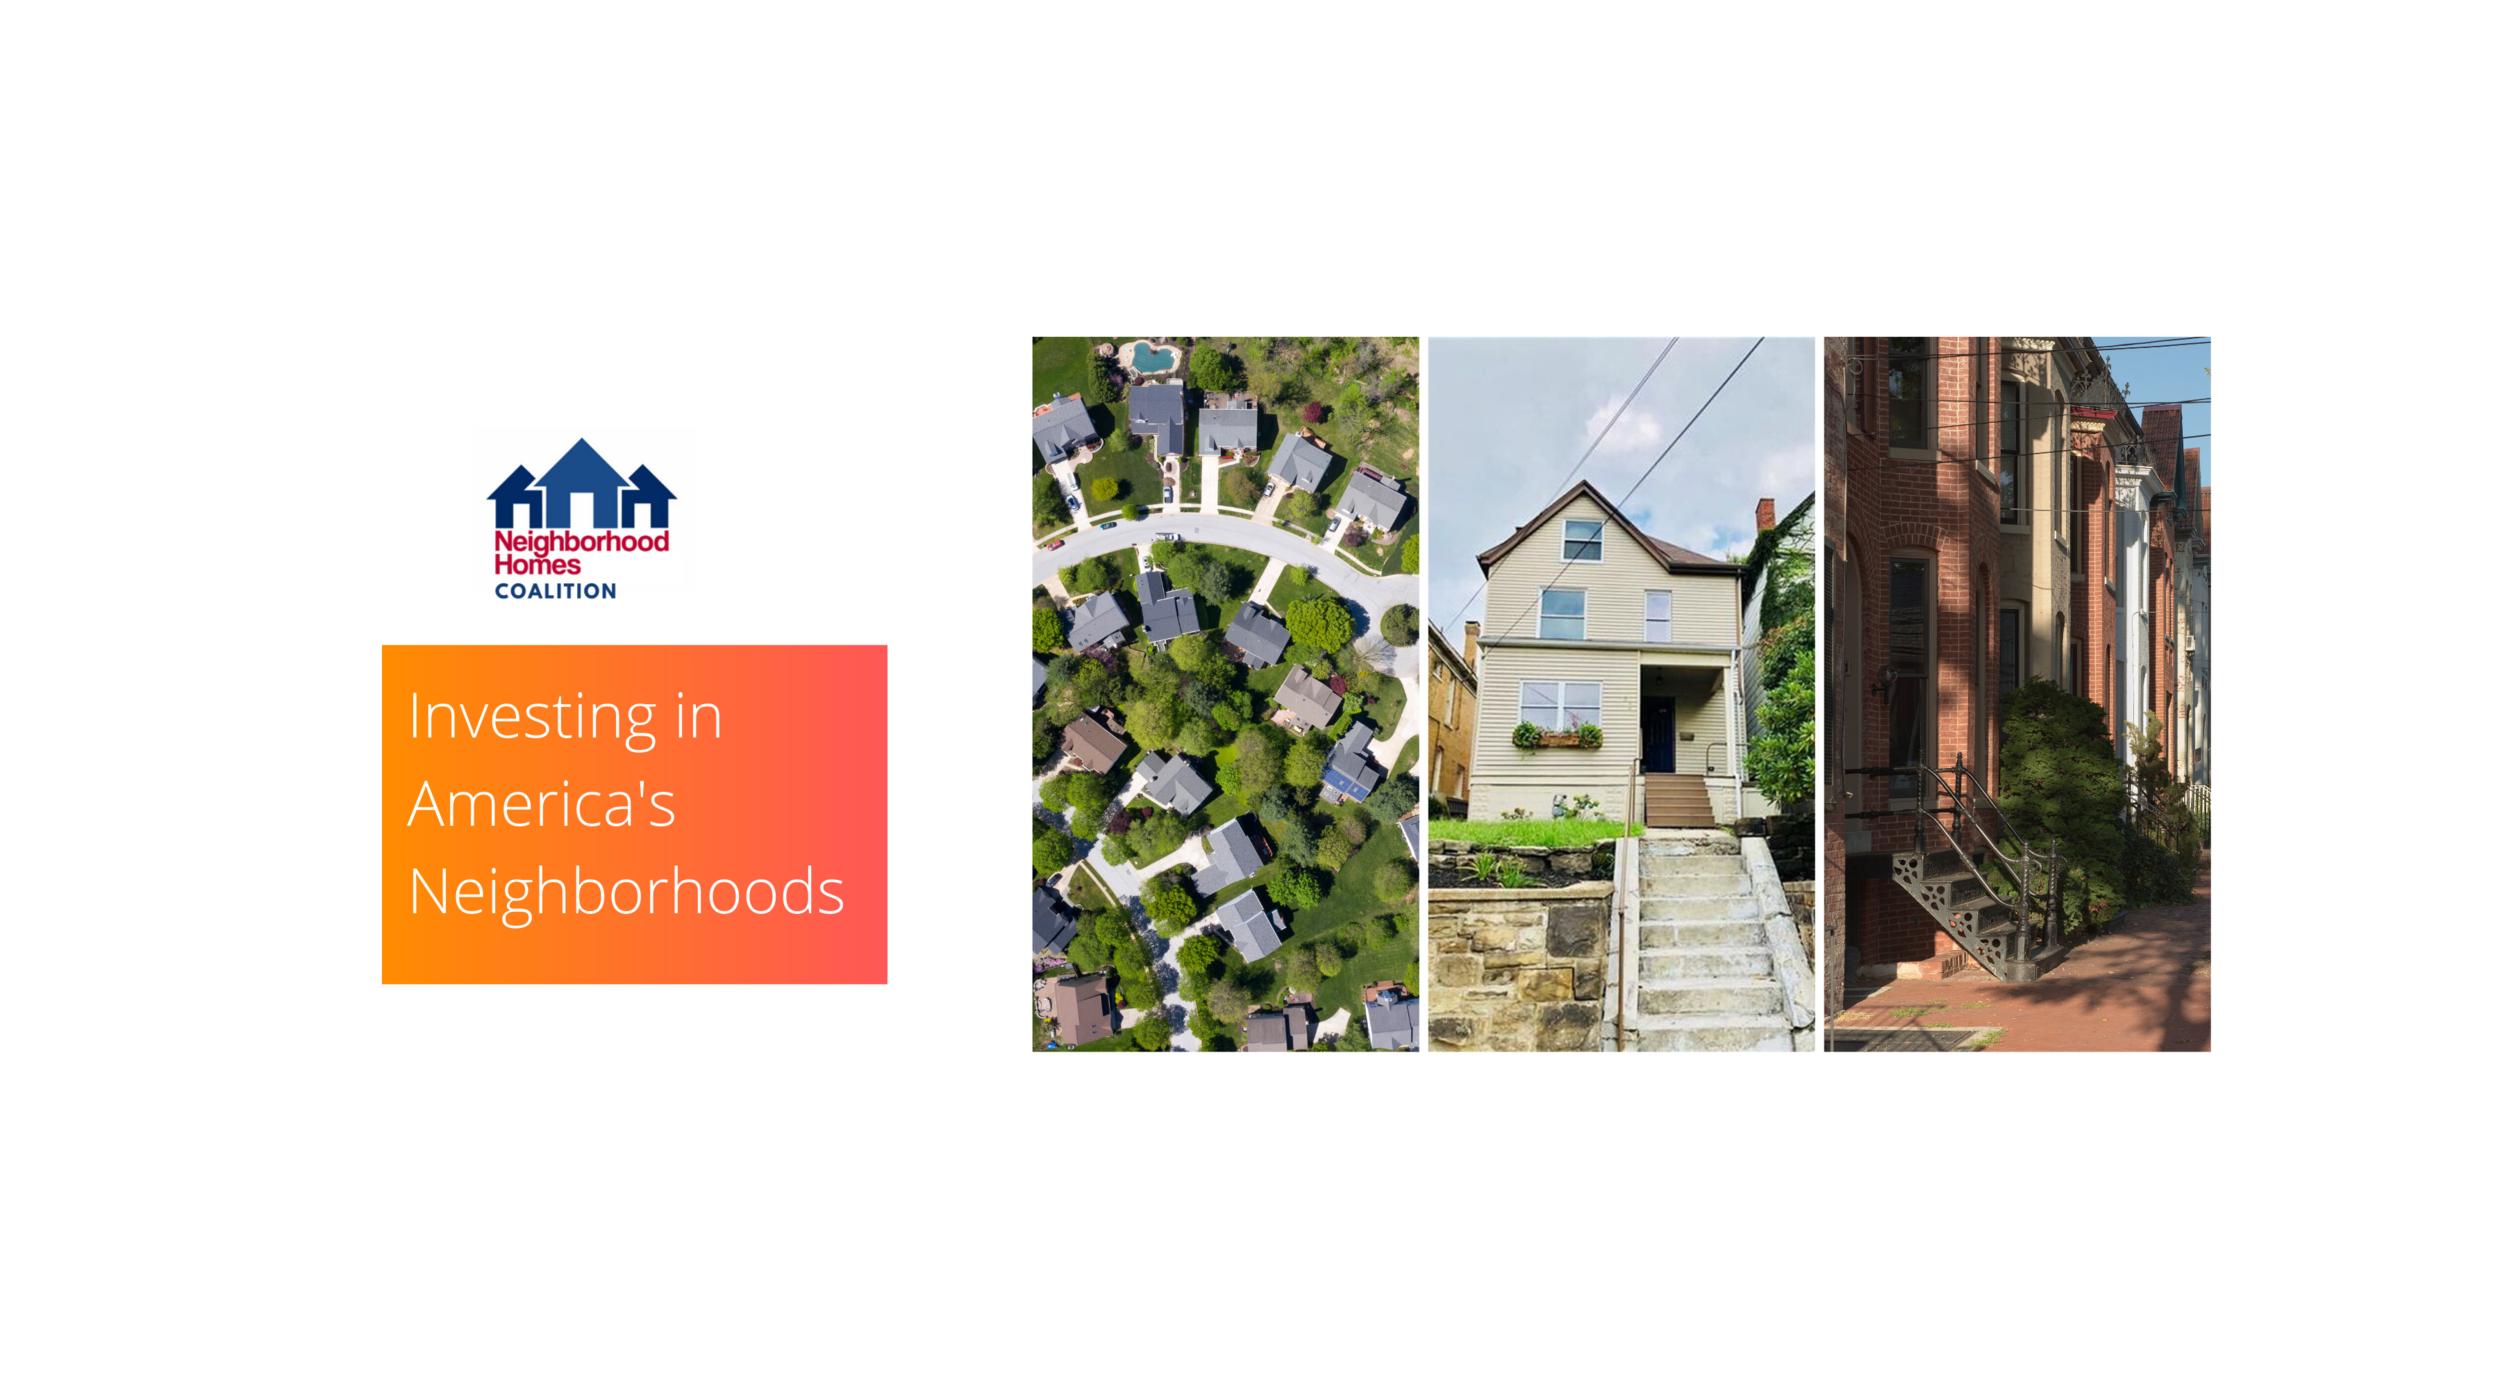 Neighborhood Homes Investment Act